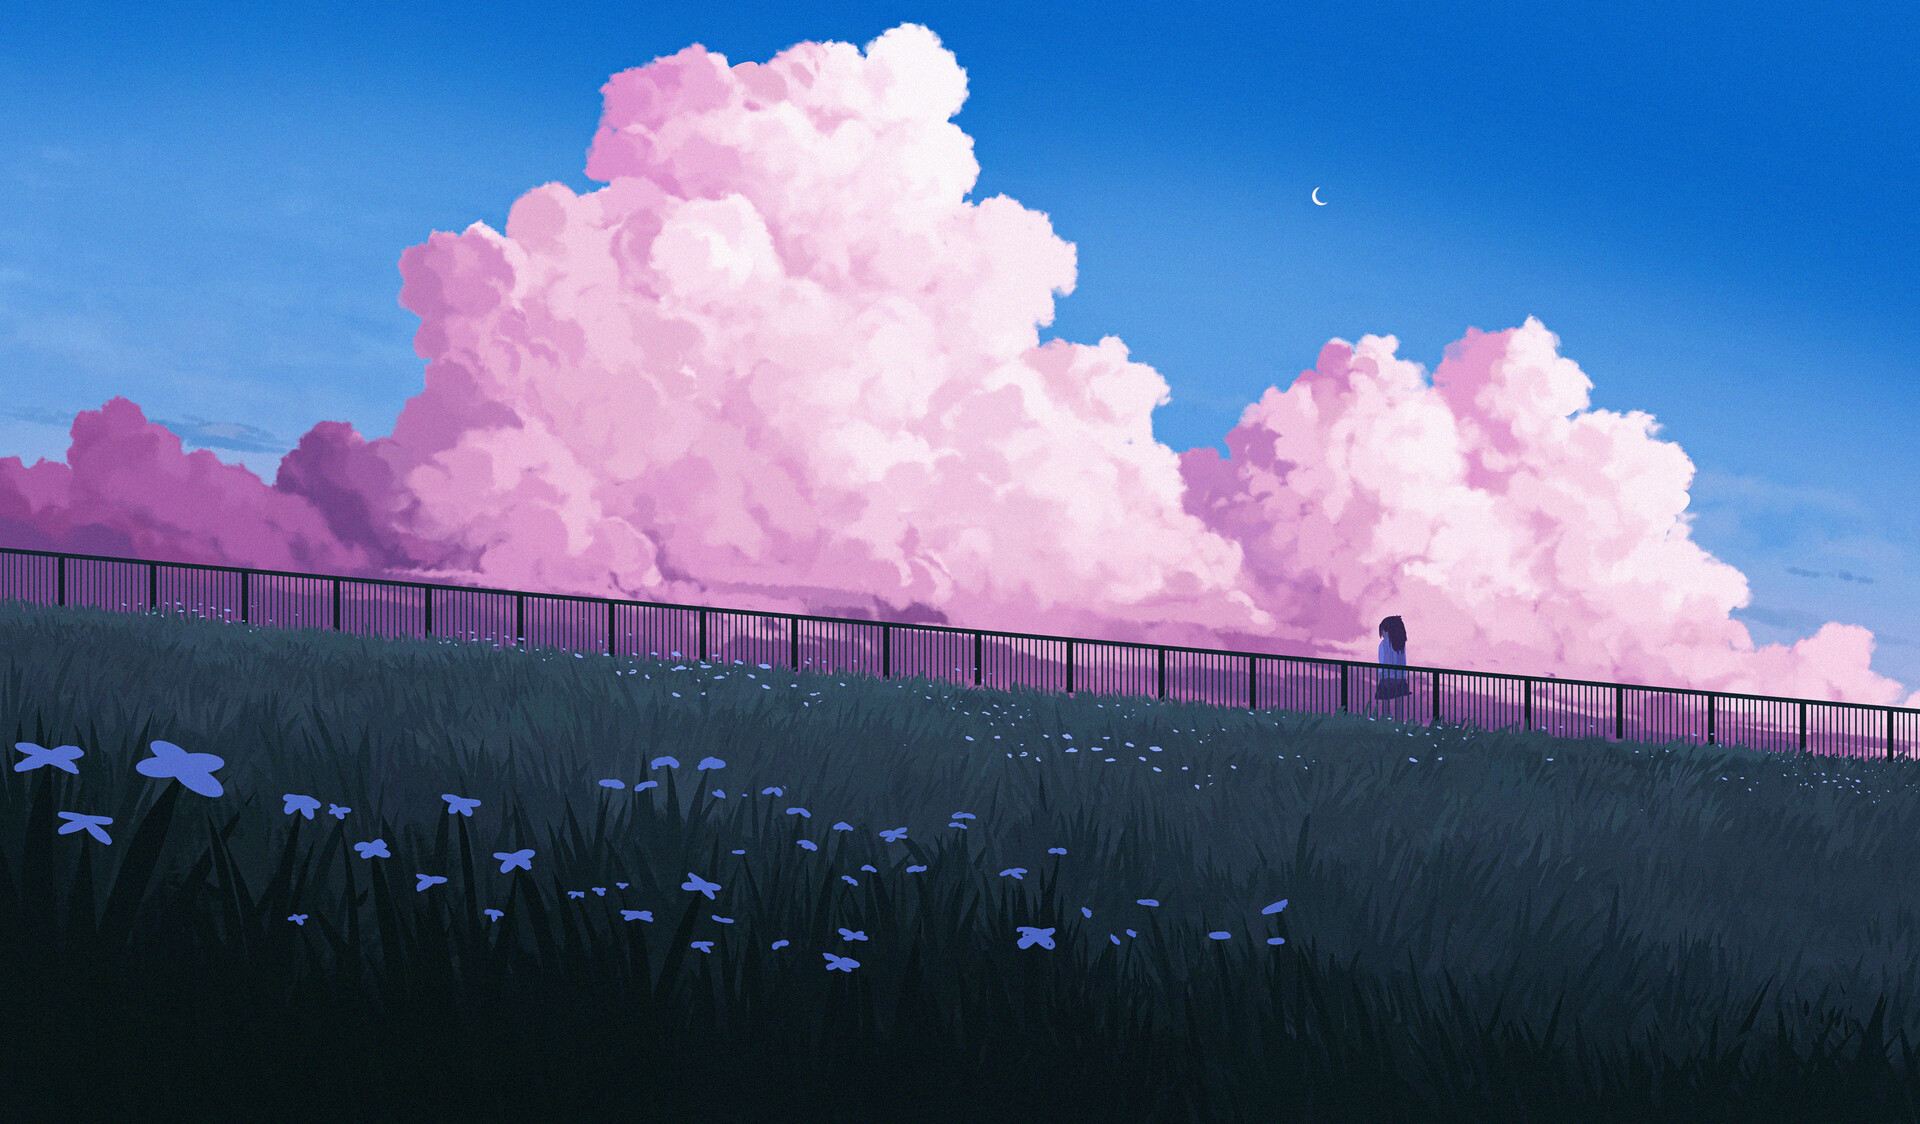 Gavryl Digital Art Clouds Pink Flowers Alone Moon 1920x1124